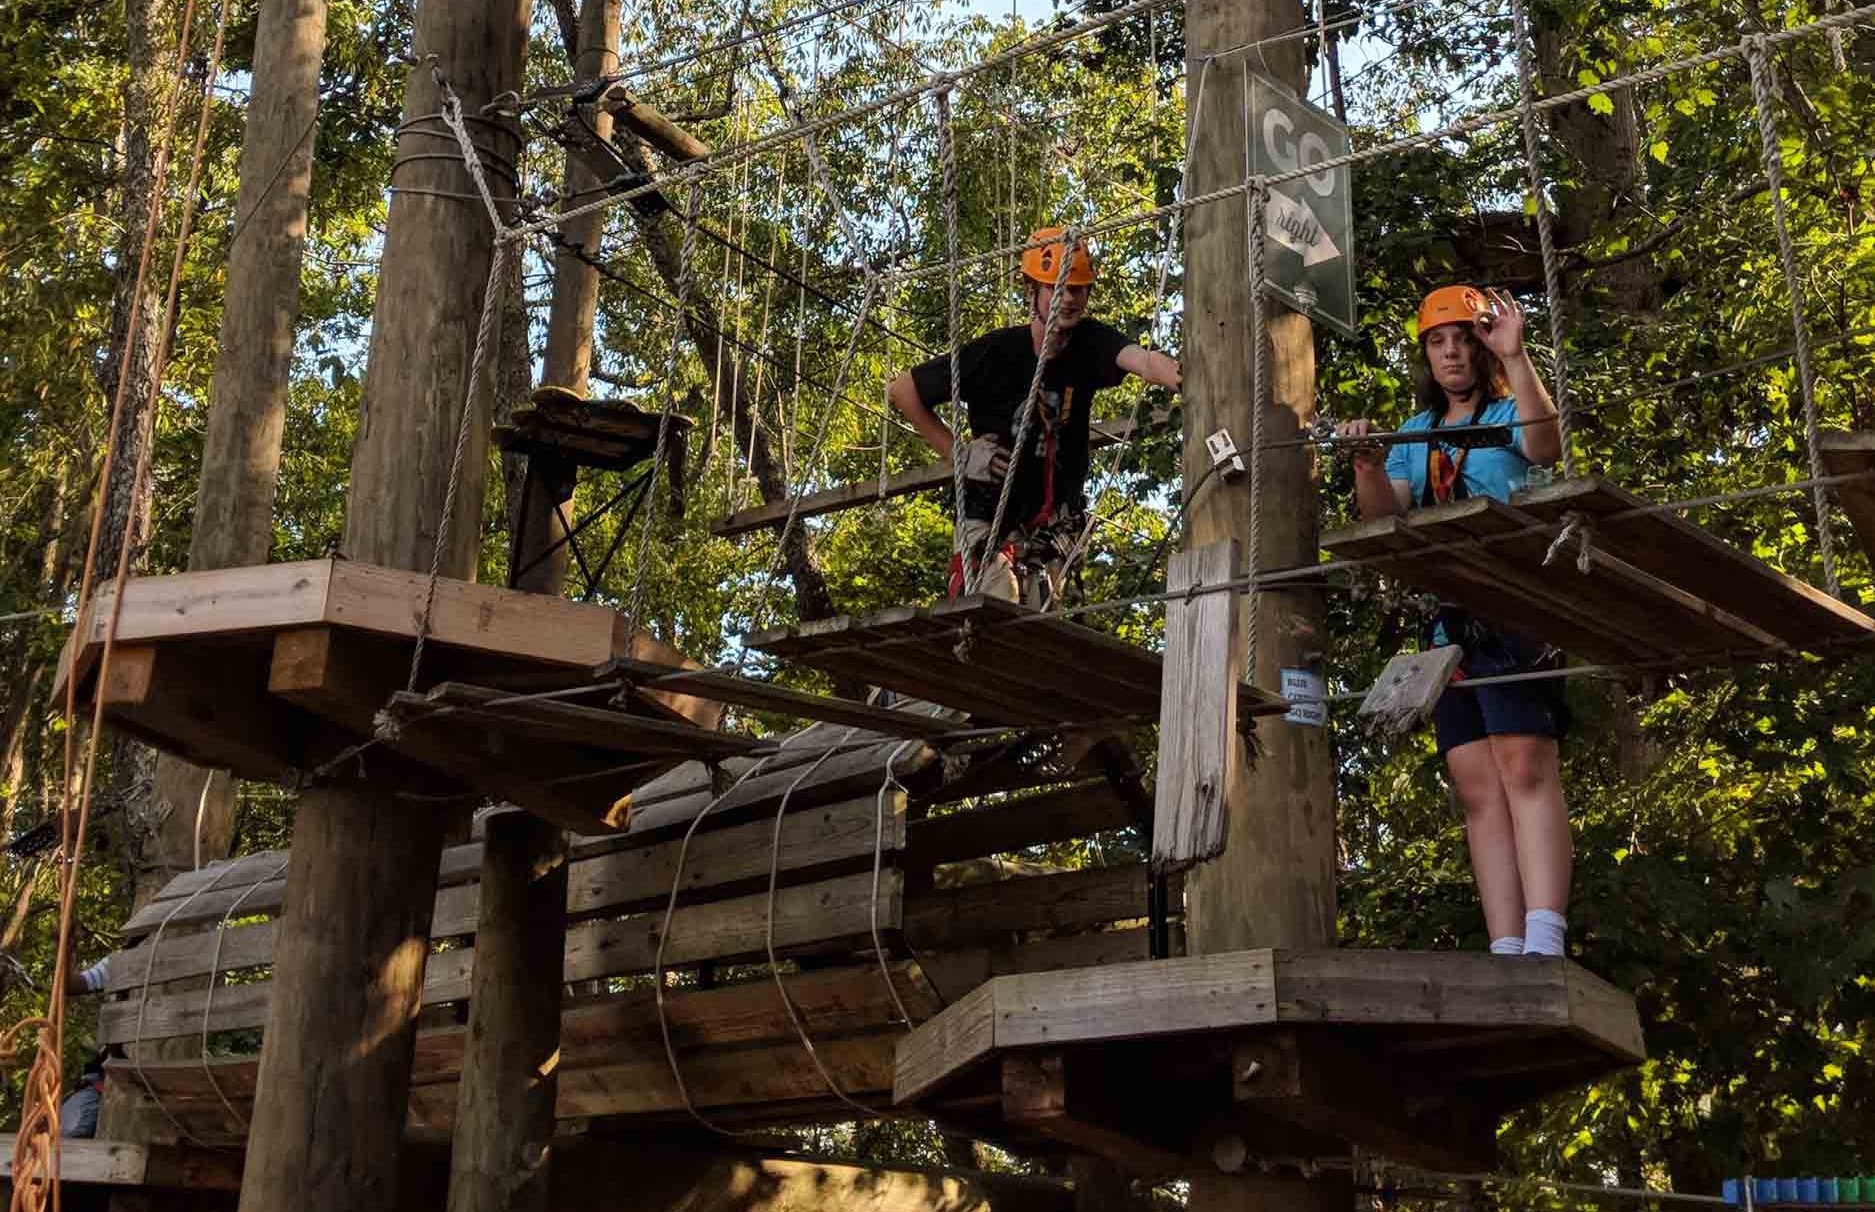 Adventure Center participants enjoy the adventure park with aerial trails